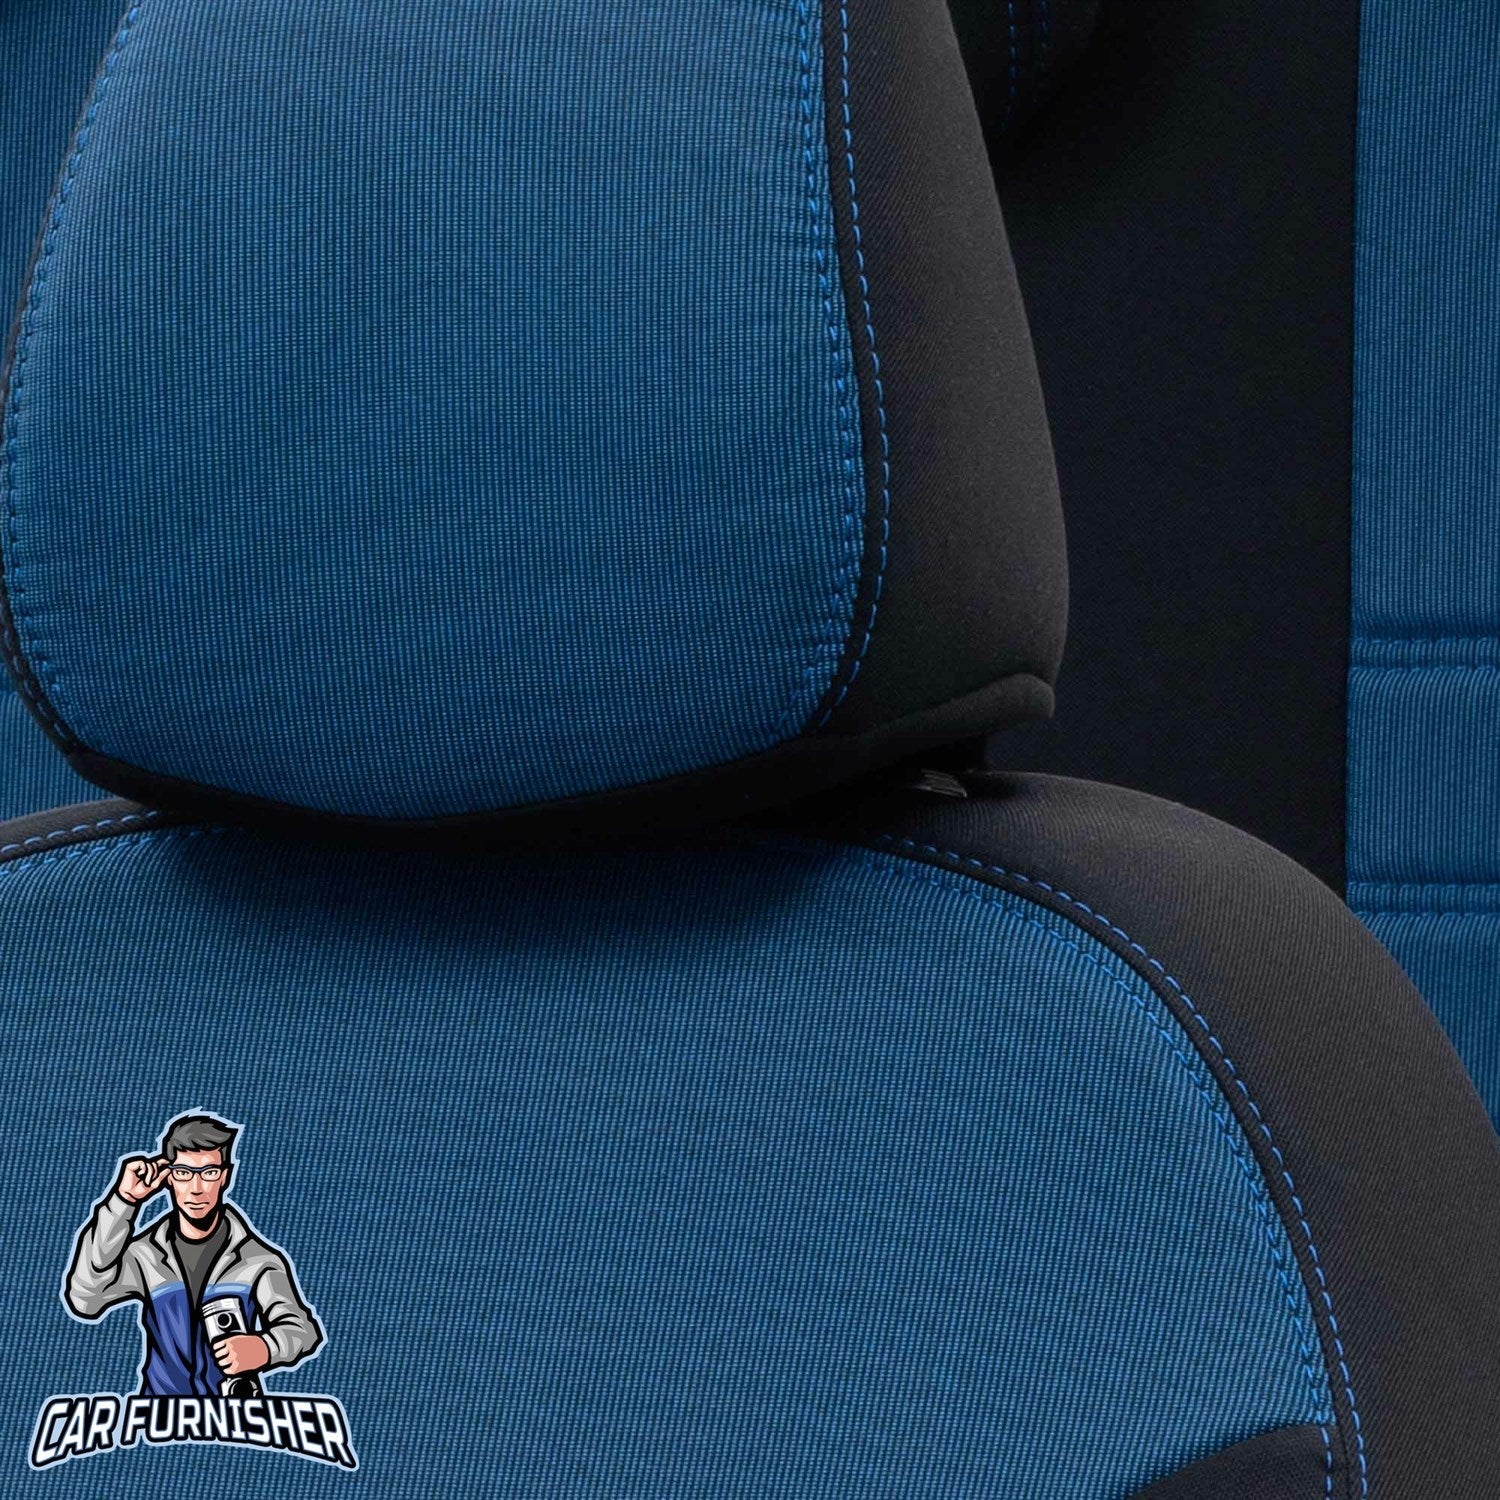 Mitsubishi Spacestar Seat Cover Original Jacquard Design Blue Jacquard Fabric